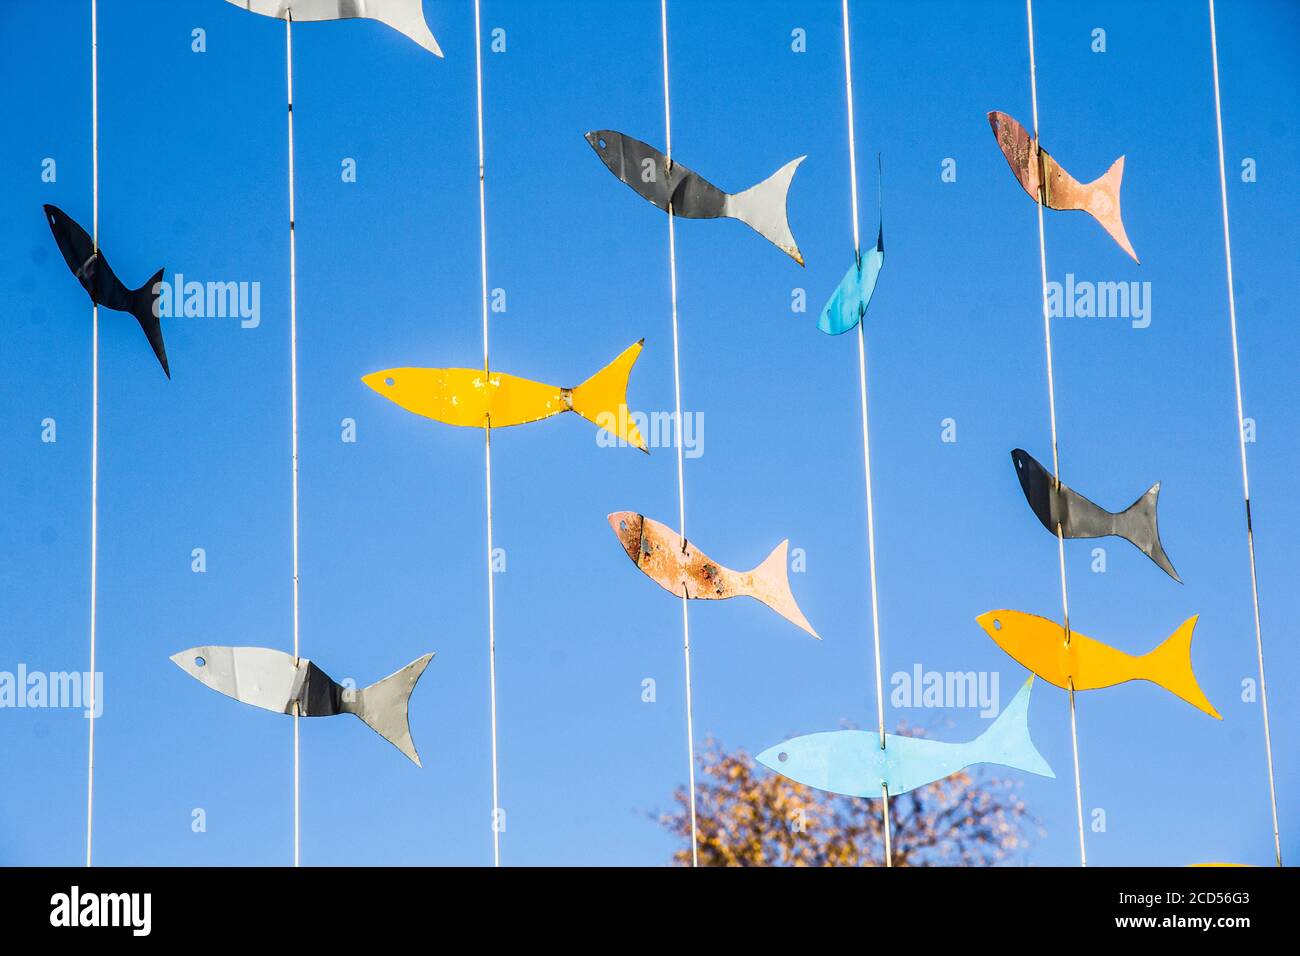 Alambre de pescado fotografías e imágenes de alta resolución - Alamy